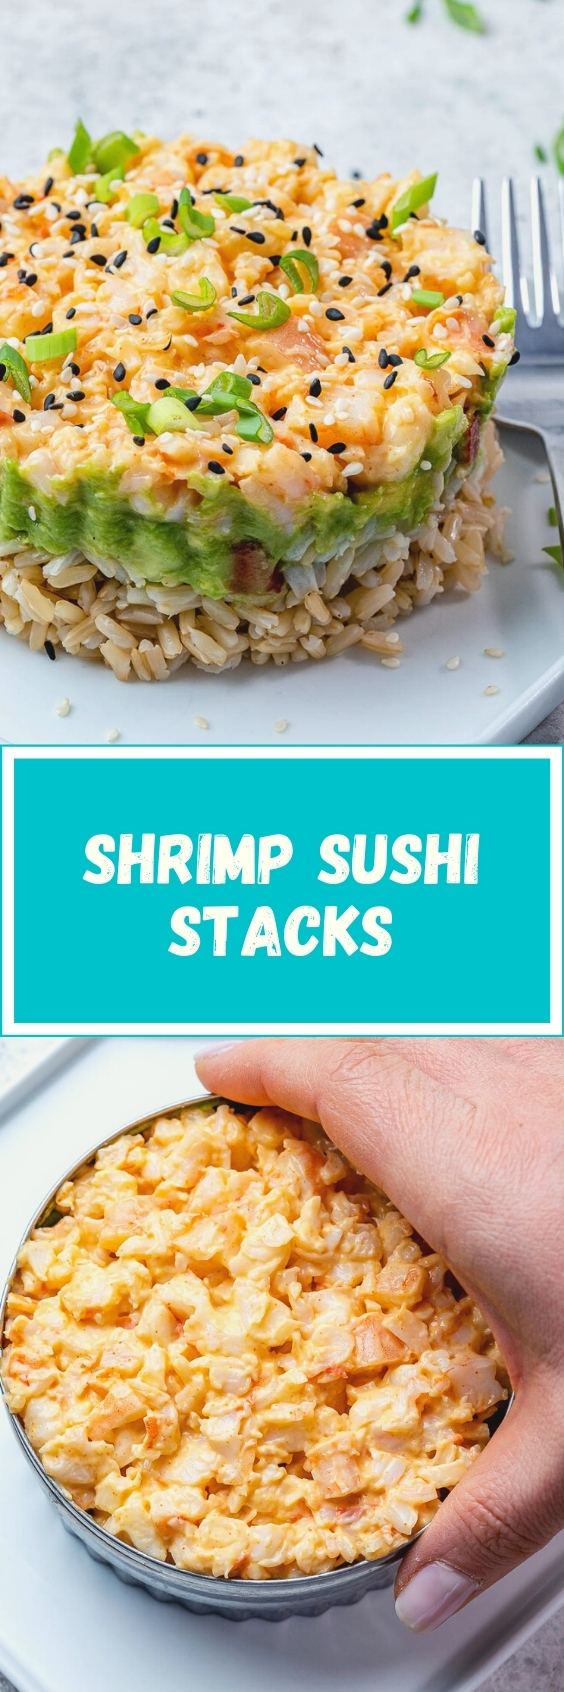 https://cleanfoodcrush.com/wp-content/uploads/2020/12/Shrimp-Sushi-Stacks-Recipe-CleanFoodCrush.jpg